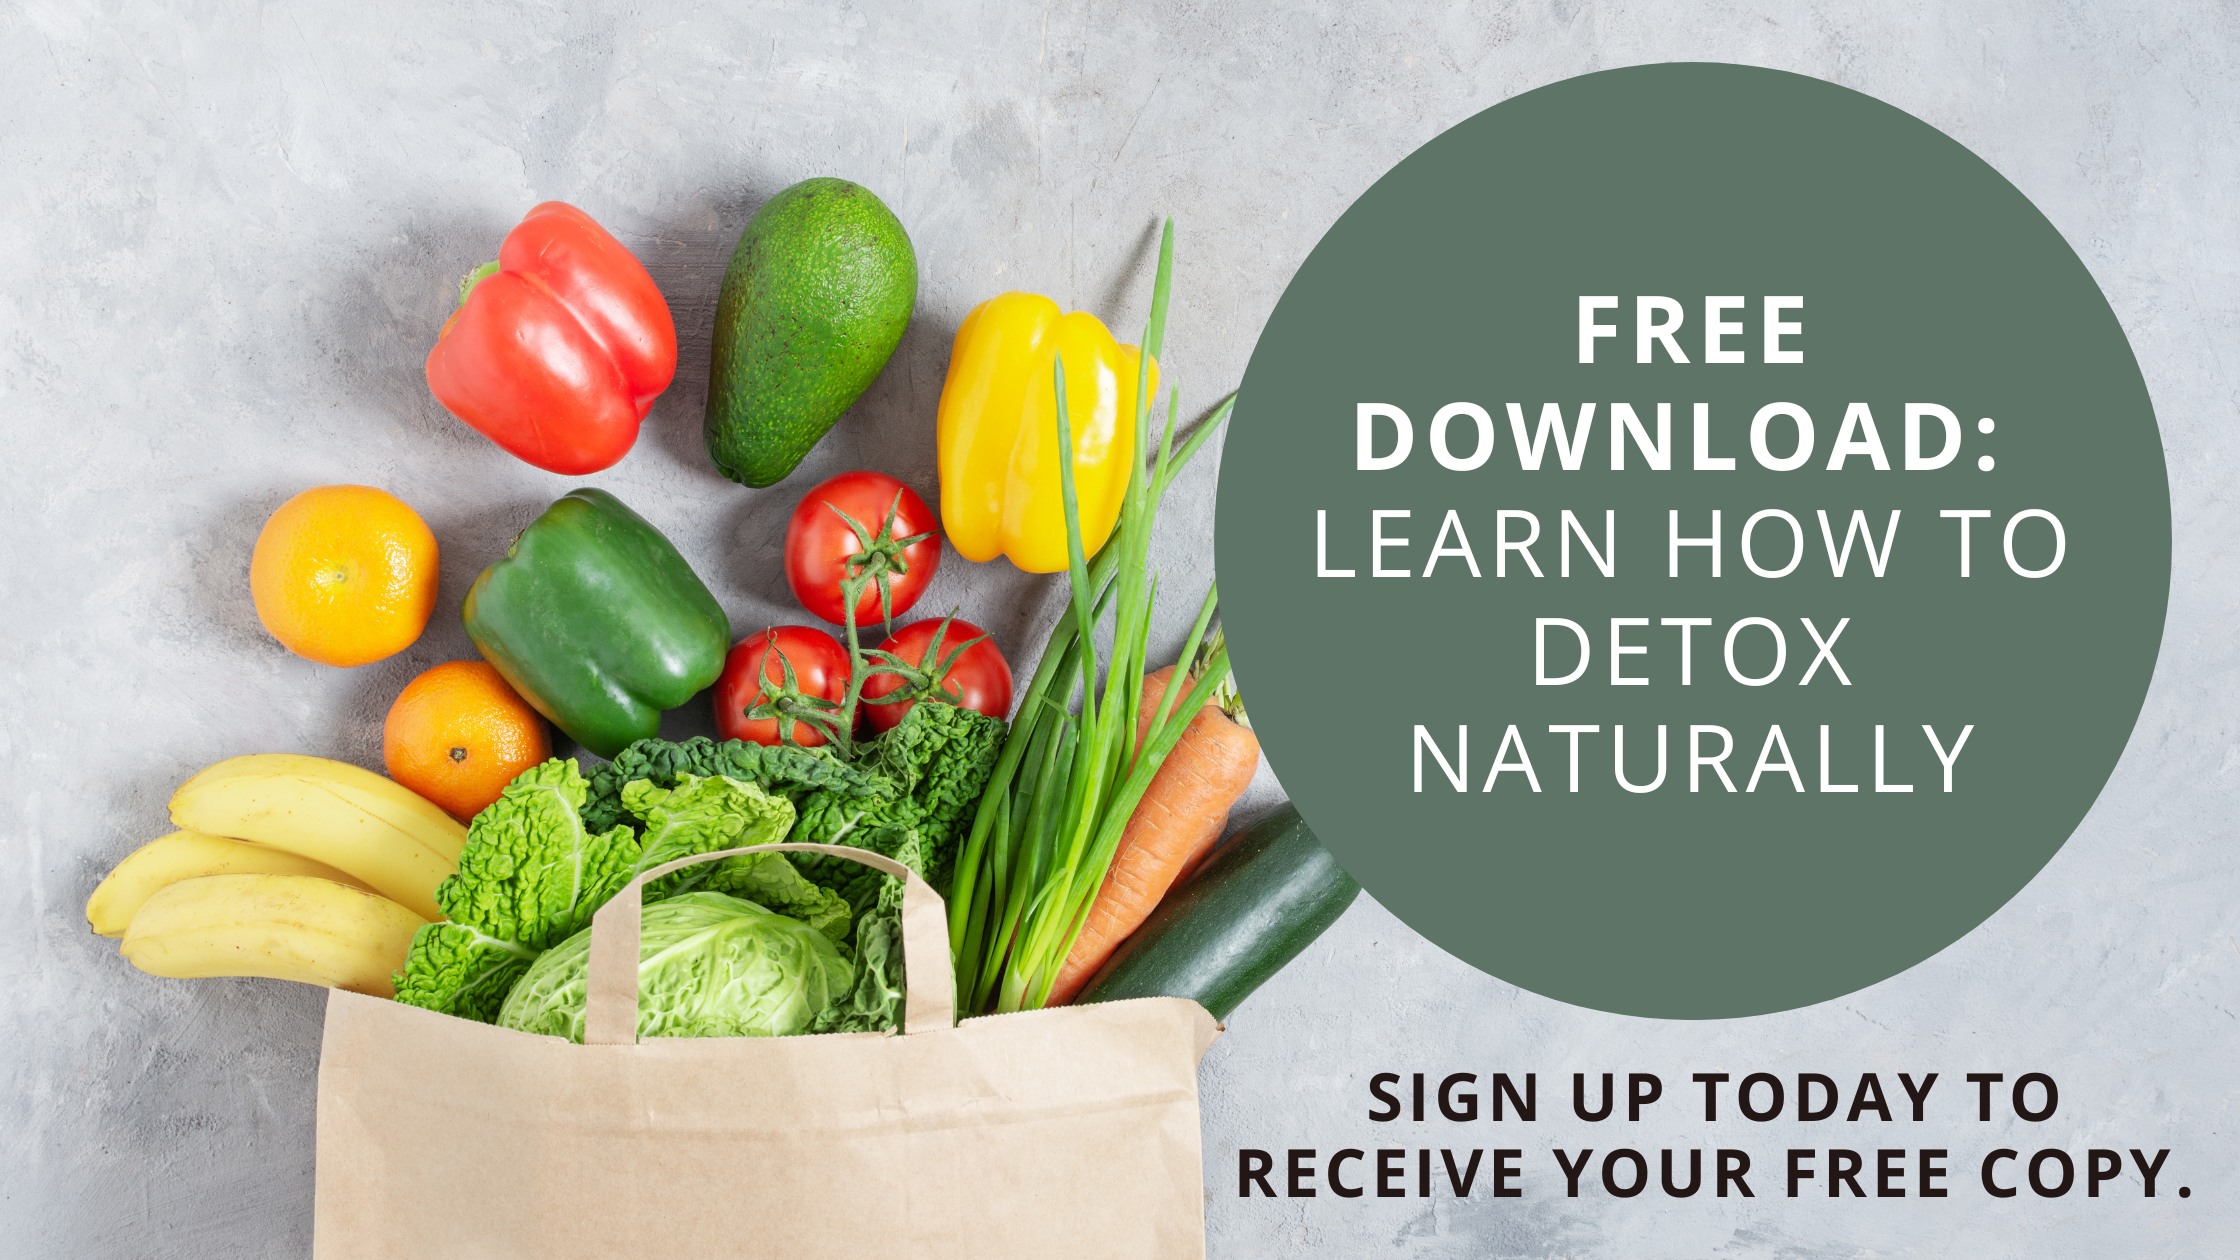 Free download- learn how to detox_leah roshel fellers (2240 × 1260 px)